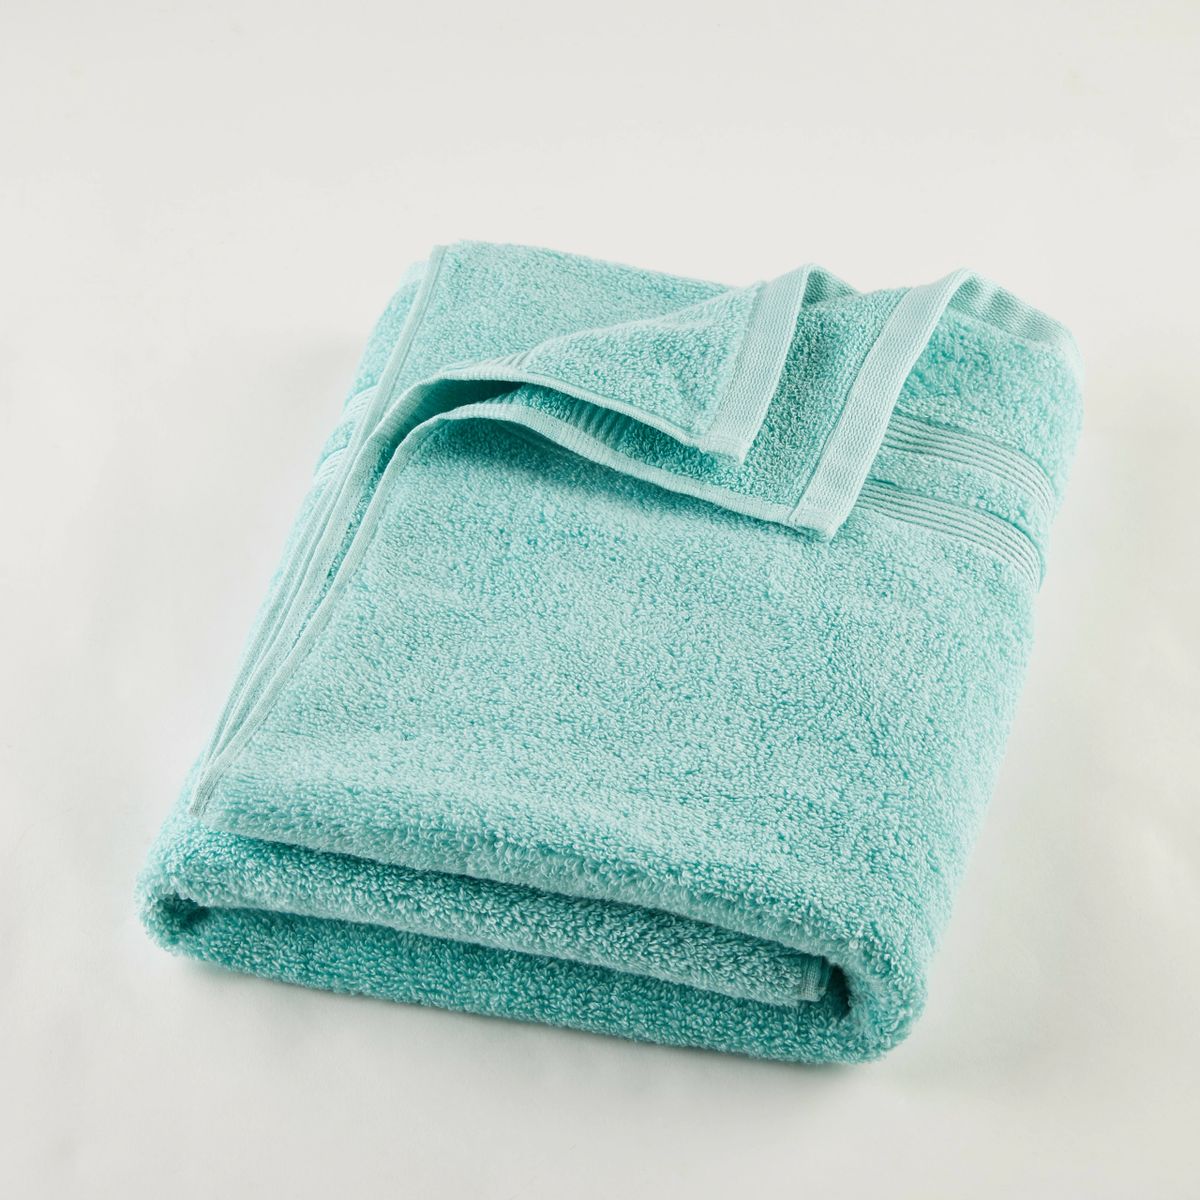 Mint Towels, The Classic Mint Towels